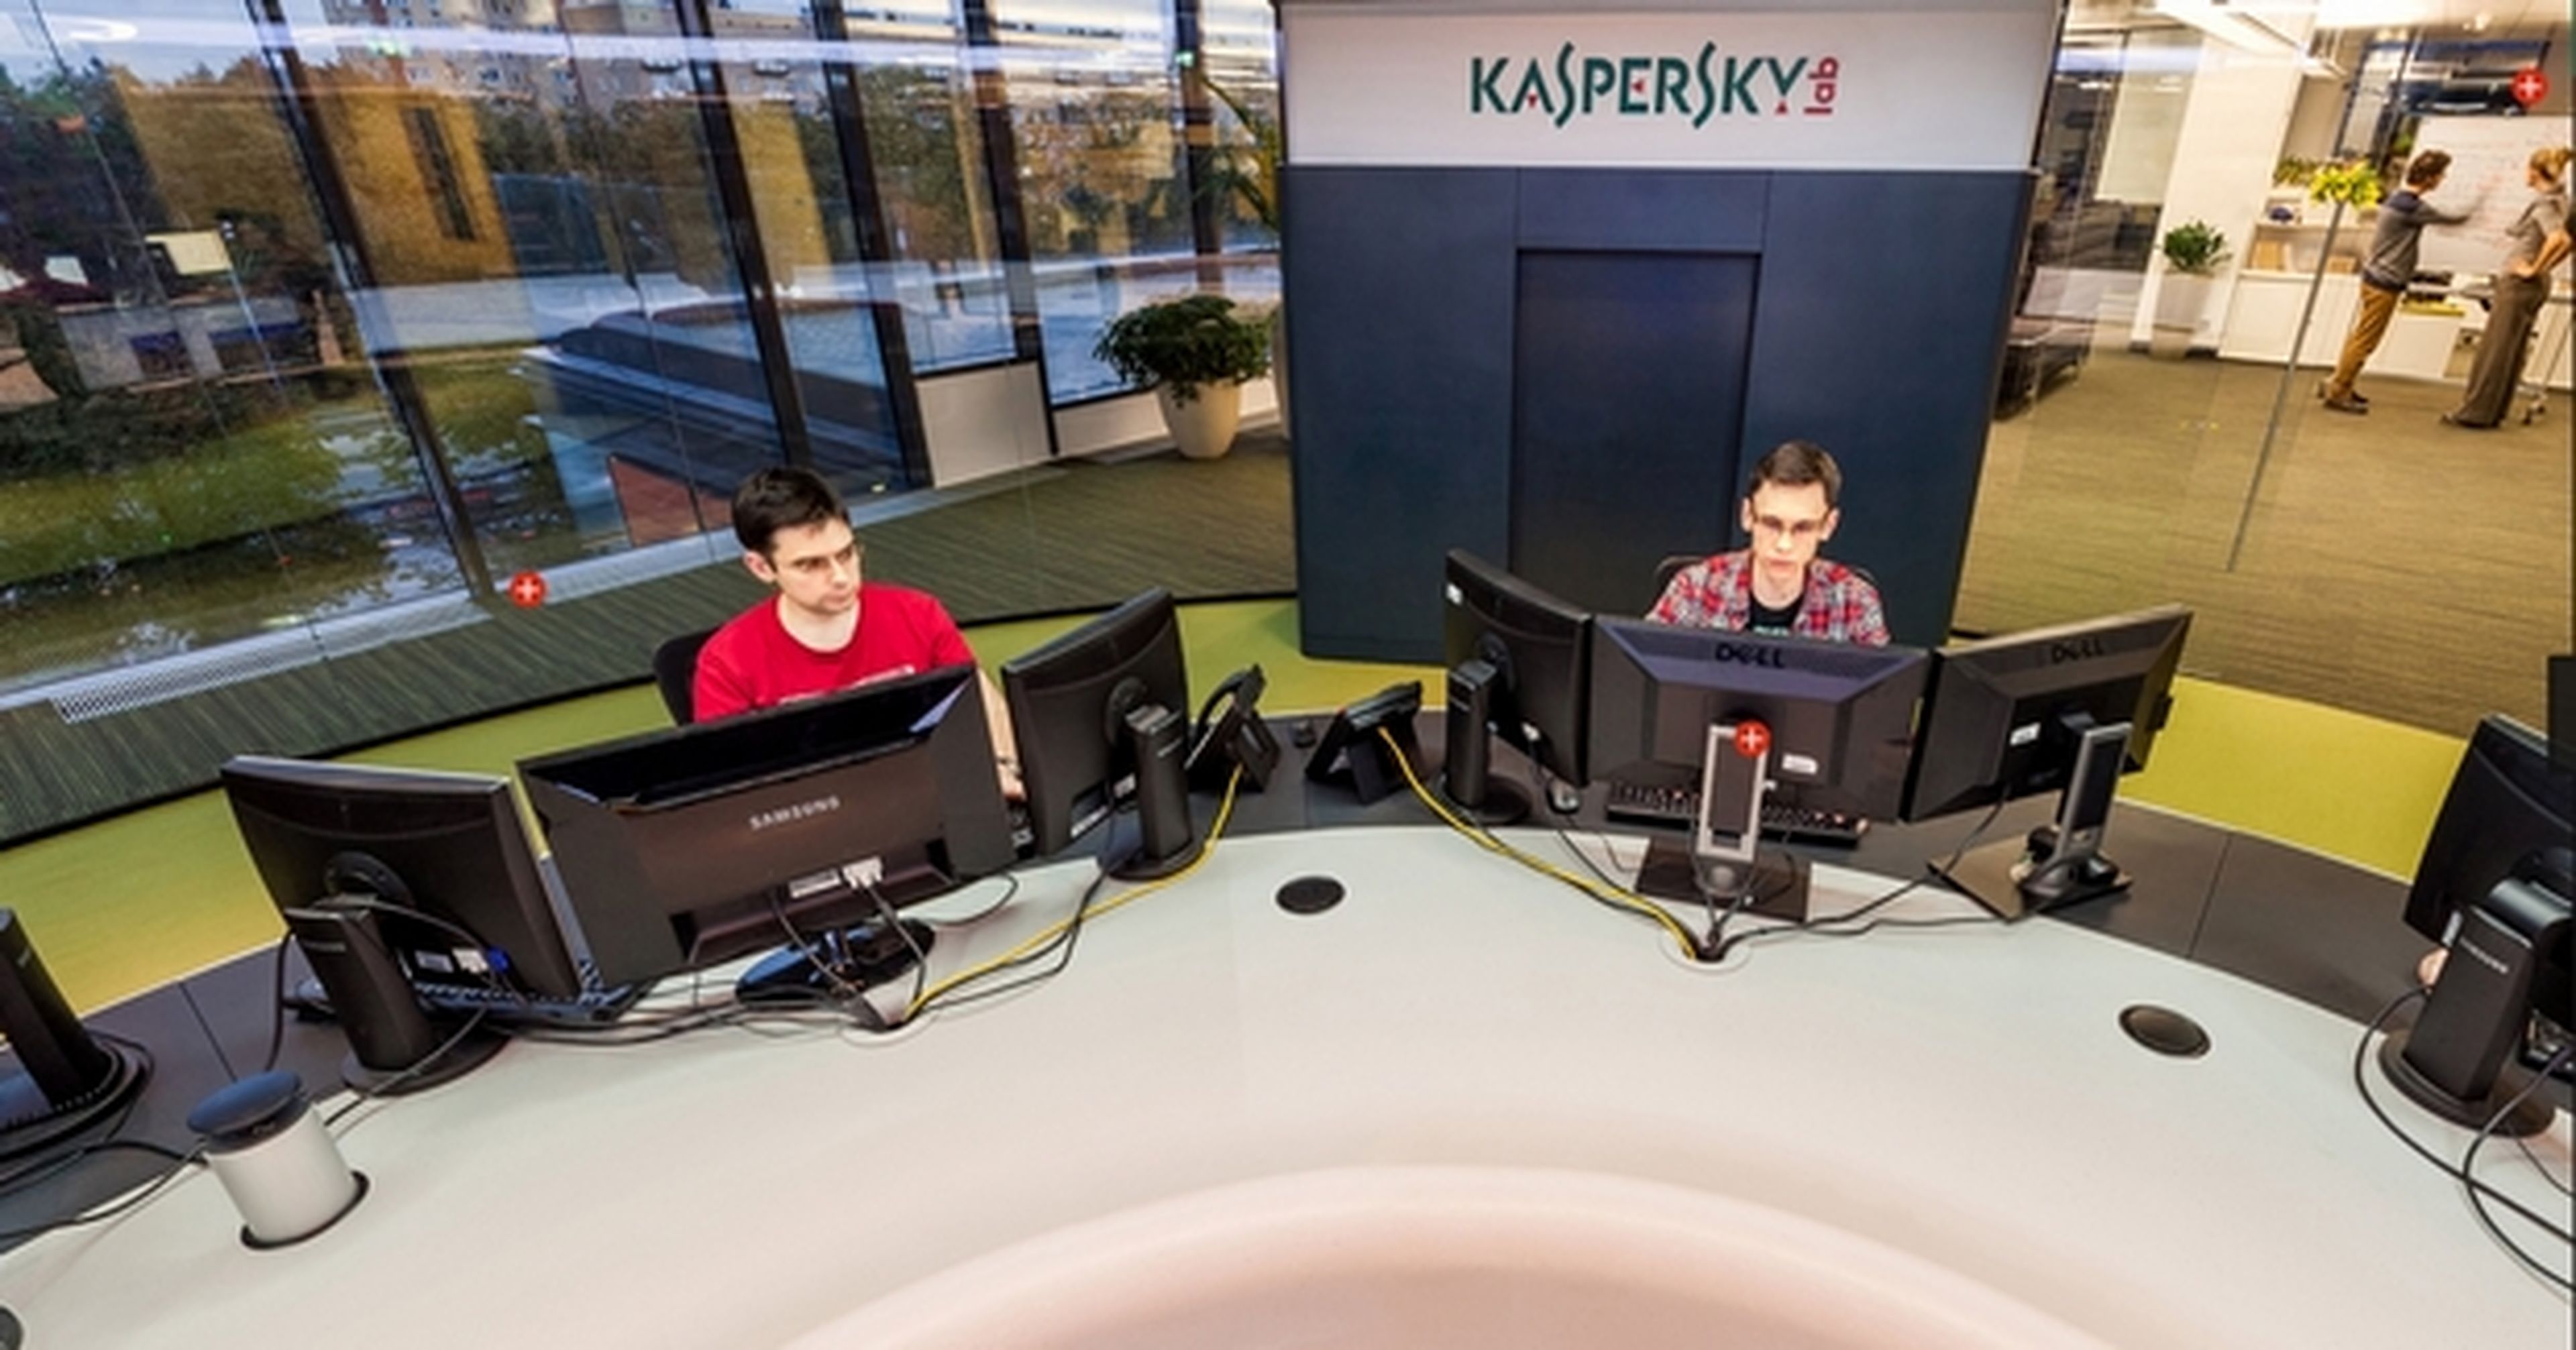 Kaspersky lab tour virtual